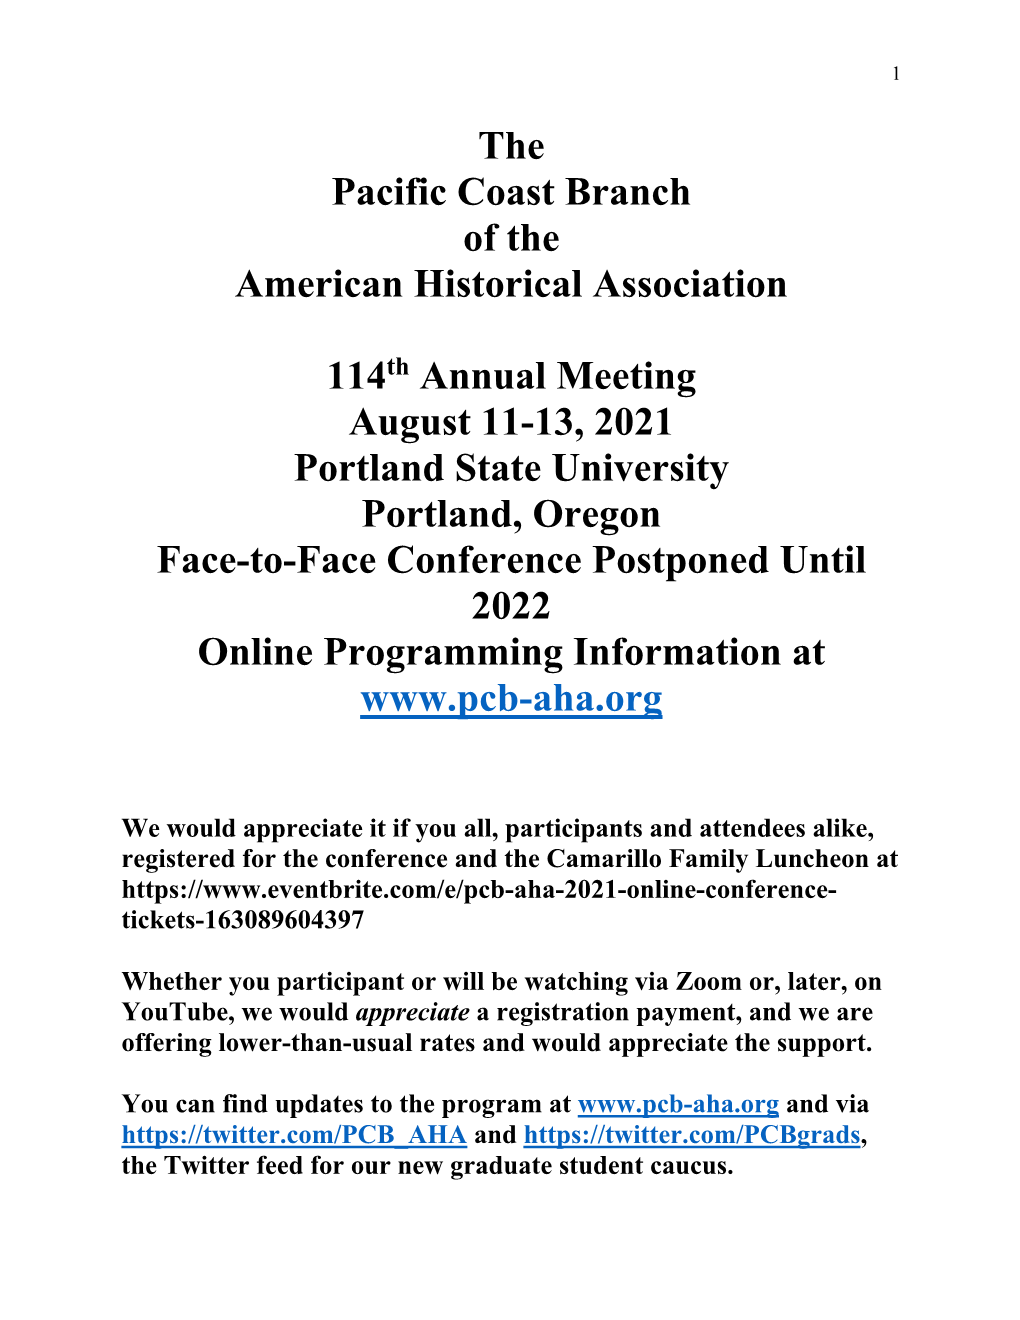 PCB-AHA 2021 Conference Program